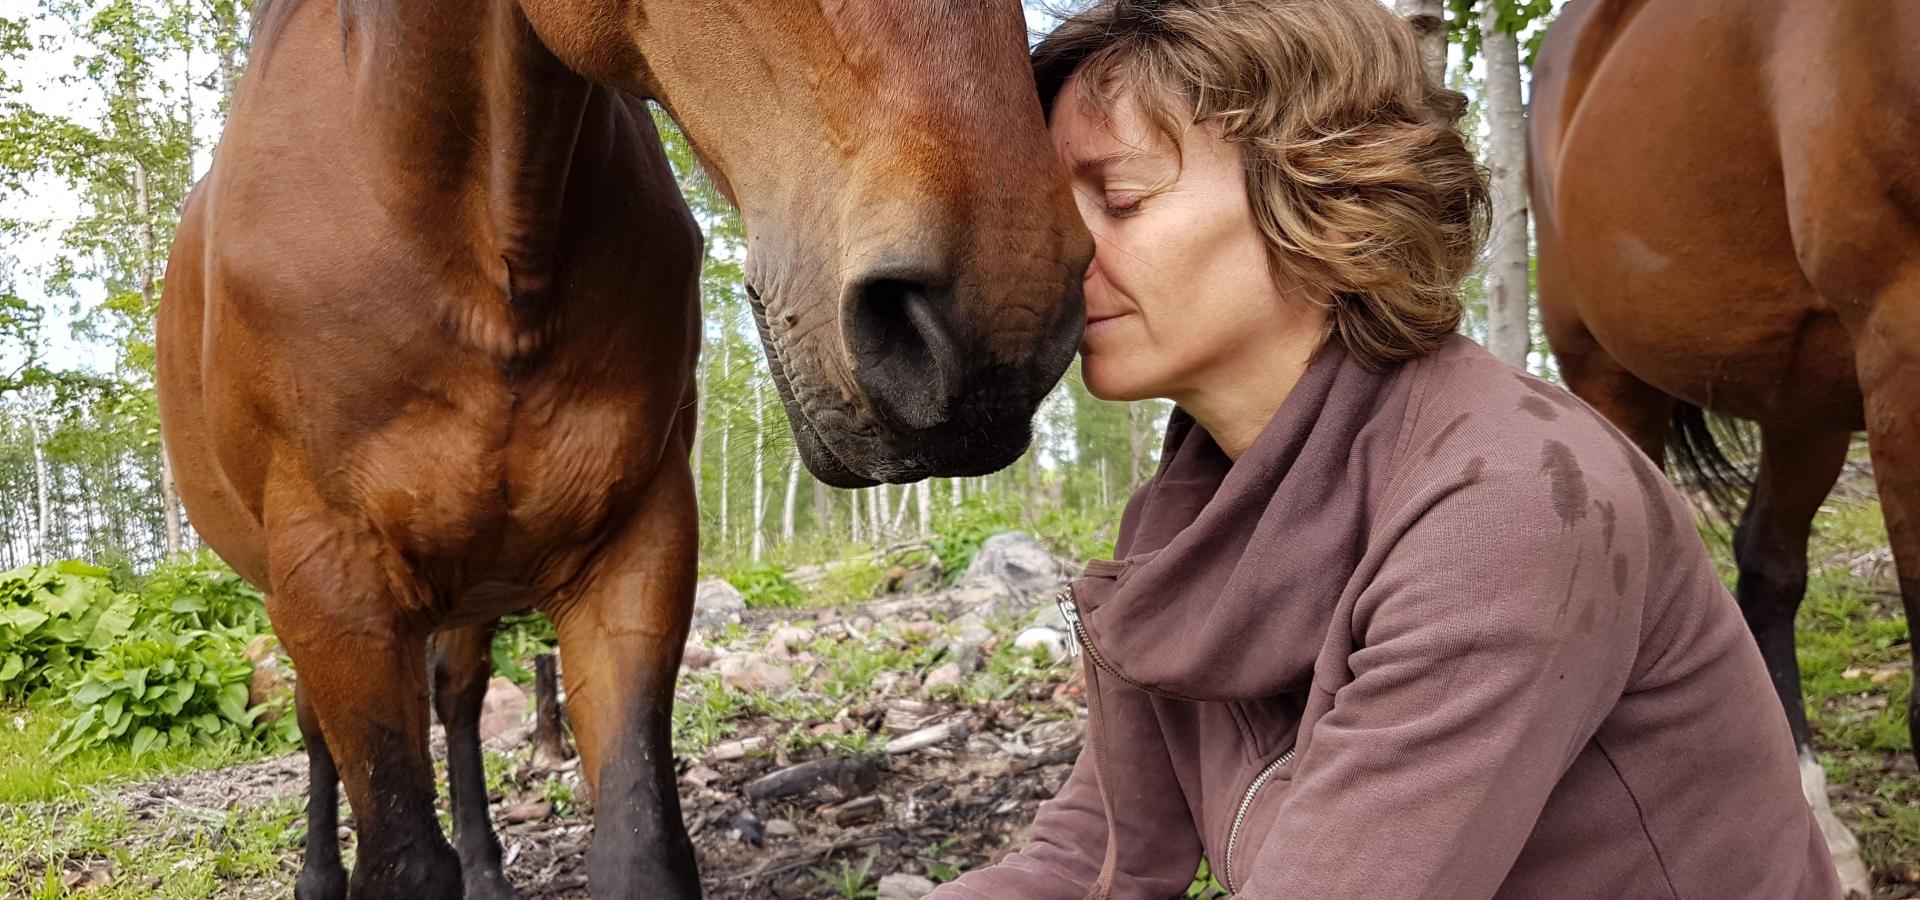 Healing genom hästar (equine therapy)